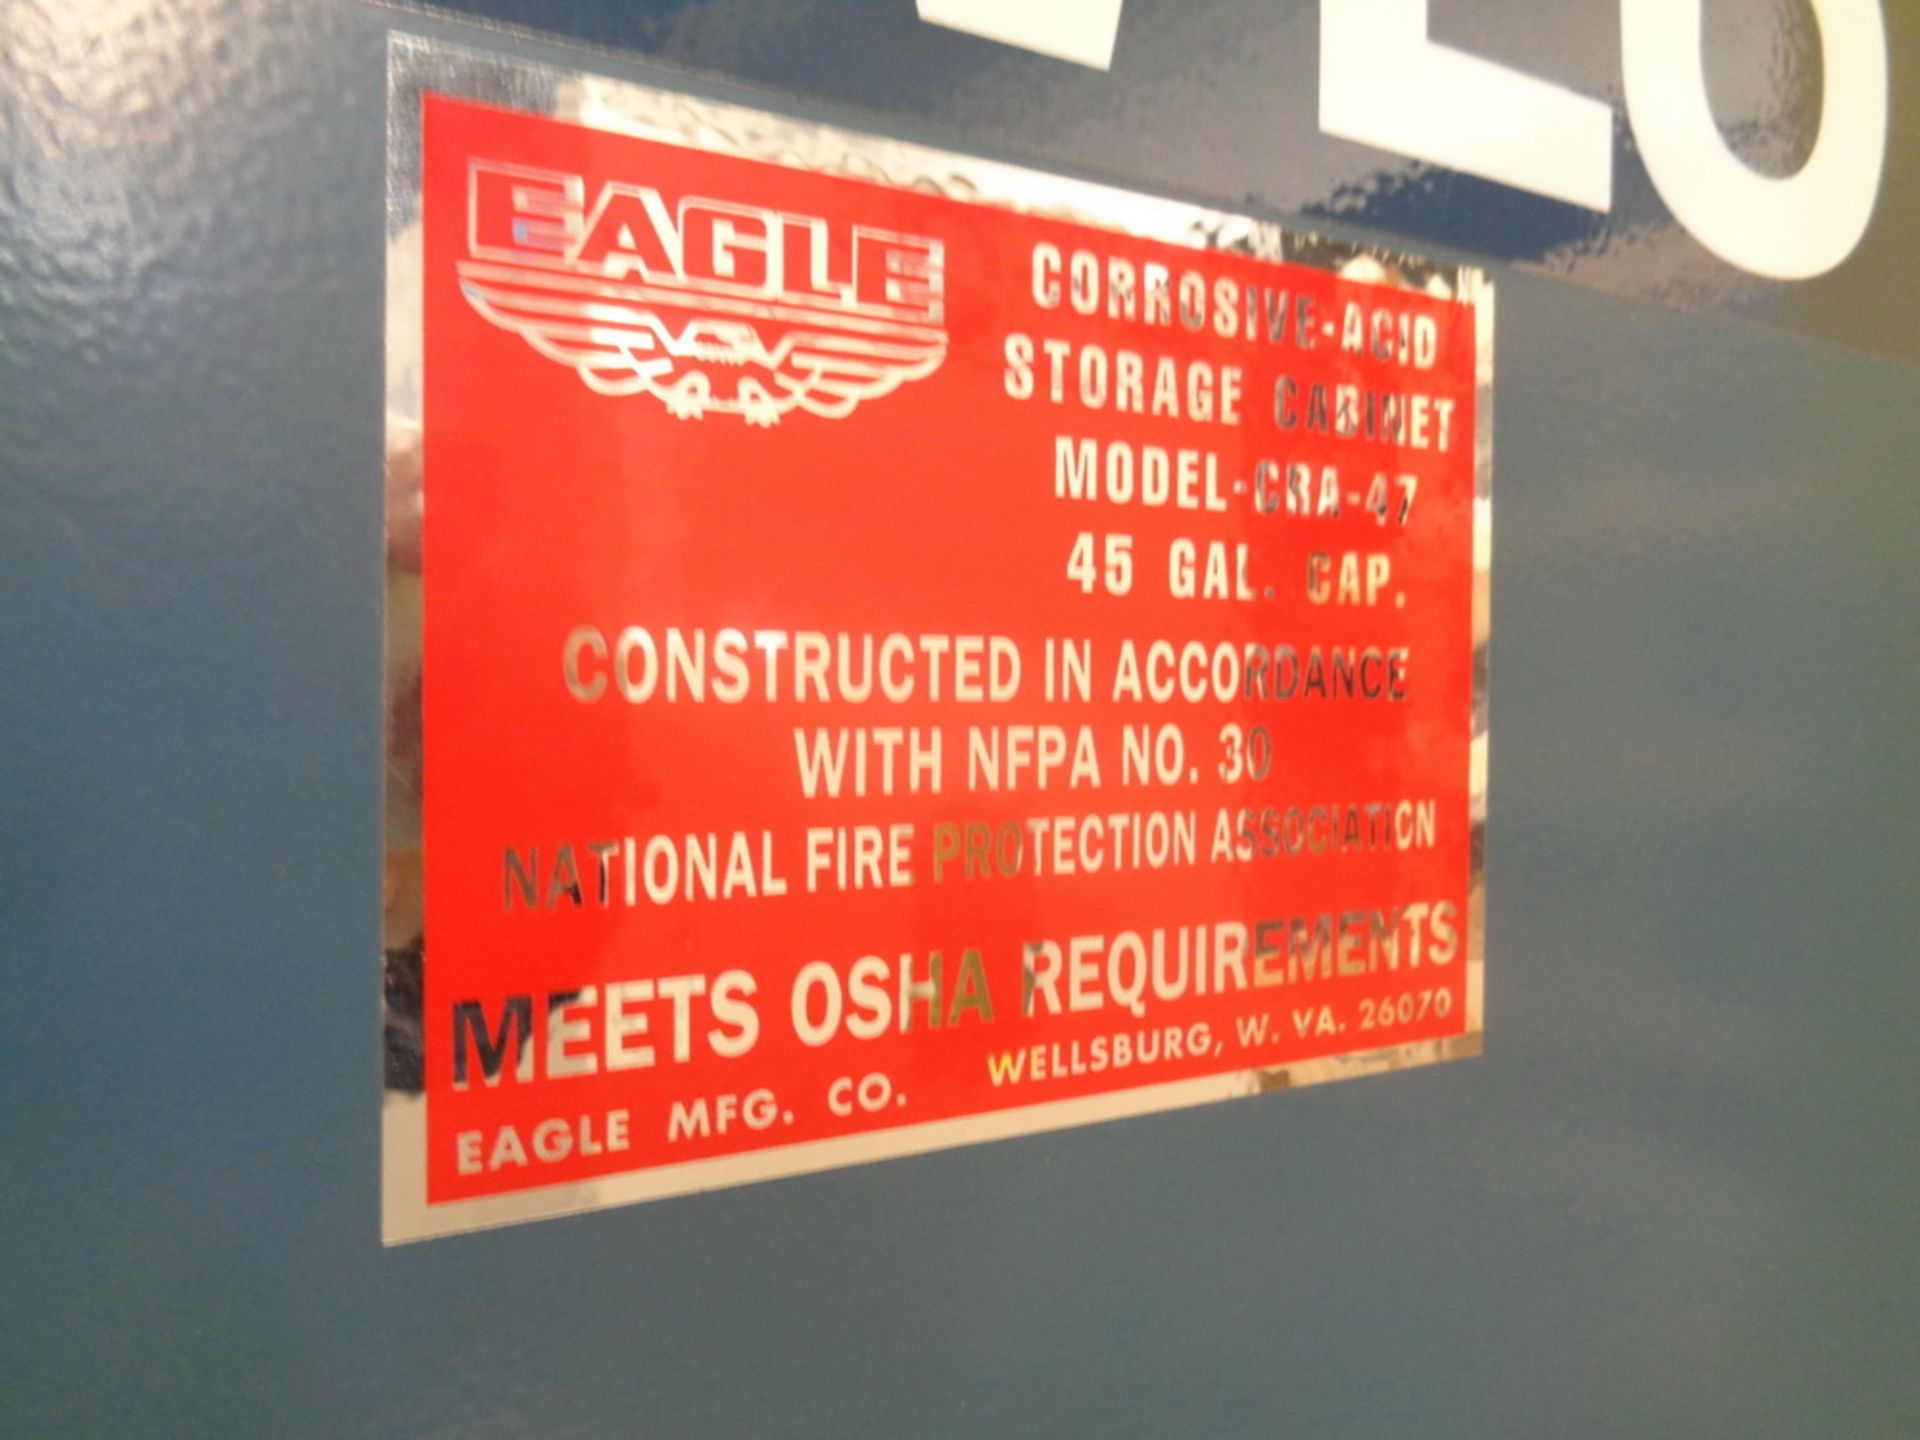 (2) Eagle 45 gallon Two Door Corrosives Storage Cabinet, Model CRA-47 - Image 2 of 3